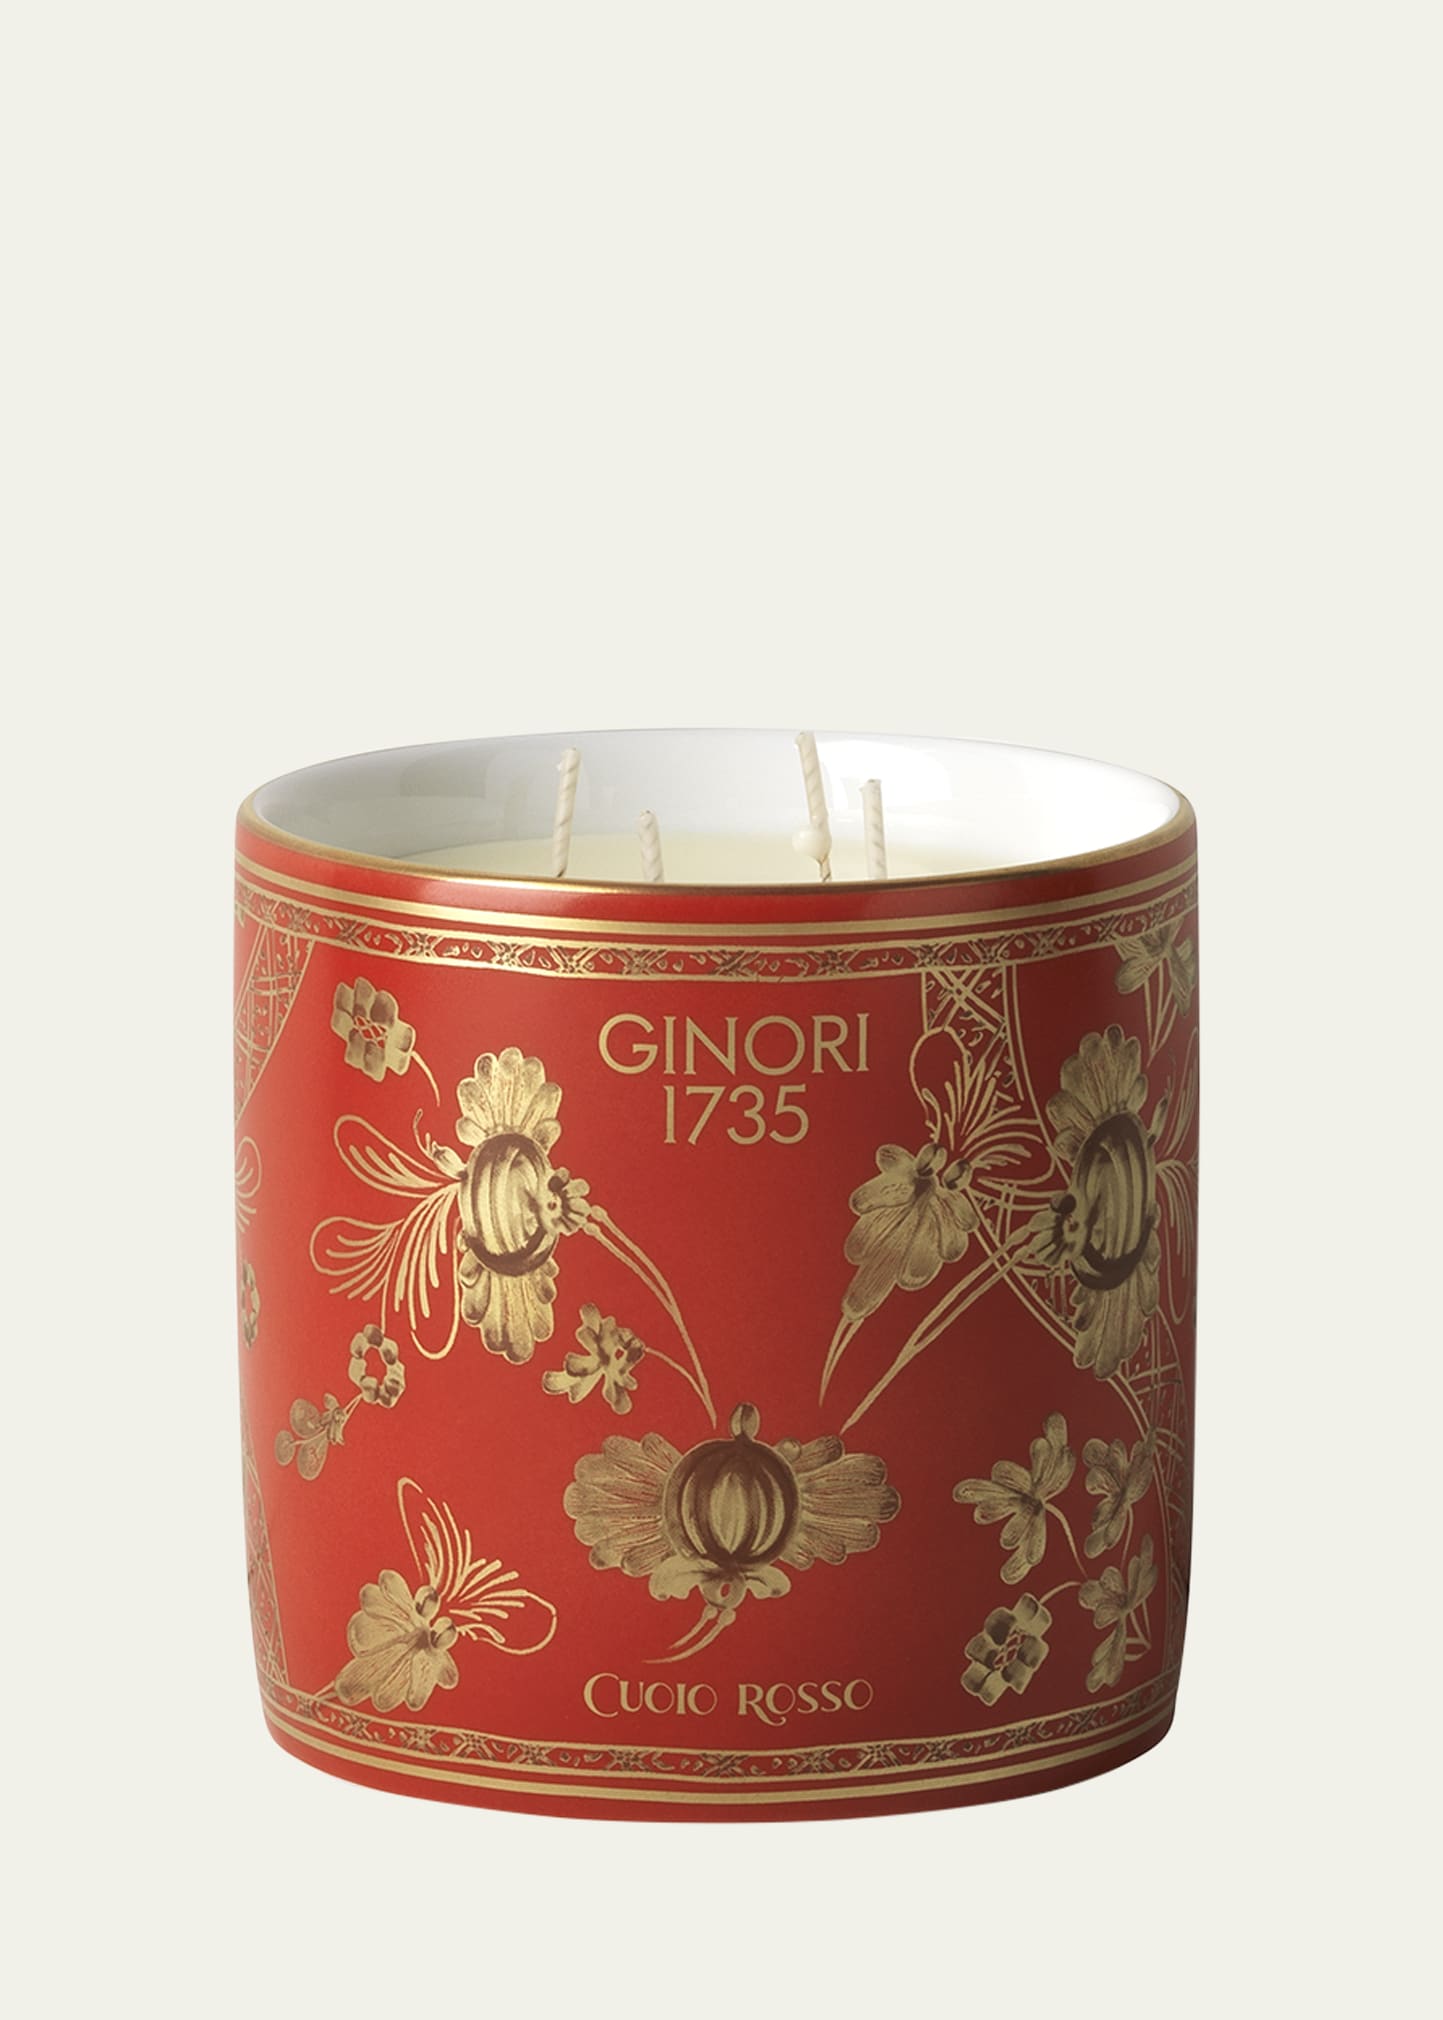 Ginori 1735 Oriente Italiano Rubrum Cuoio Rosso Candle, 700g In Oirubrum-cuoio